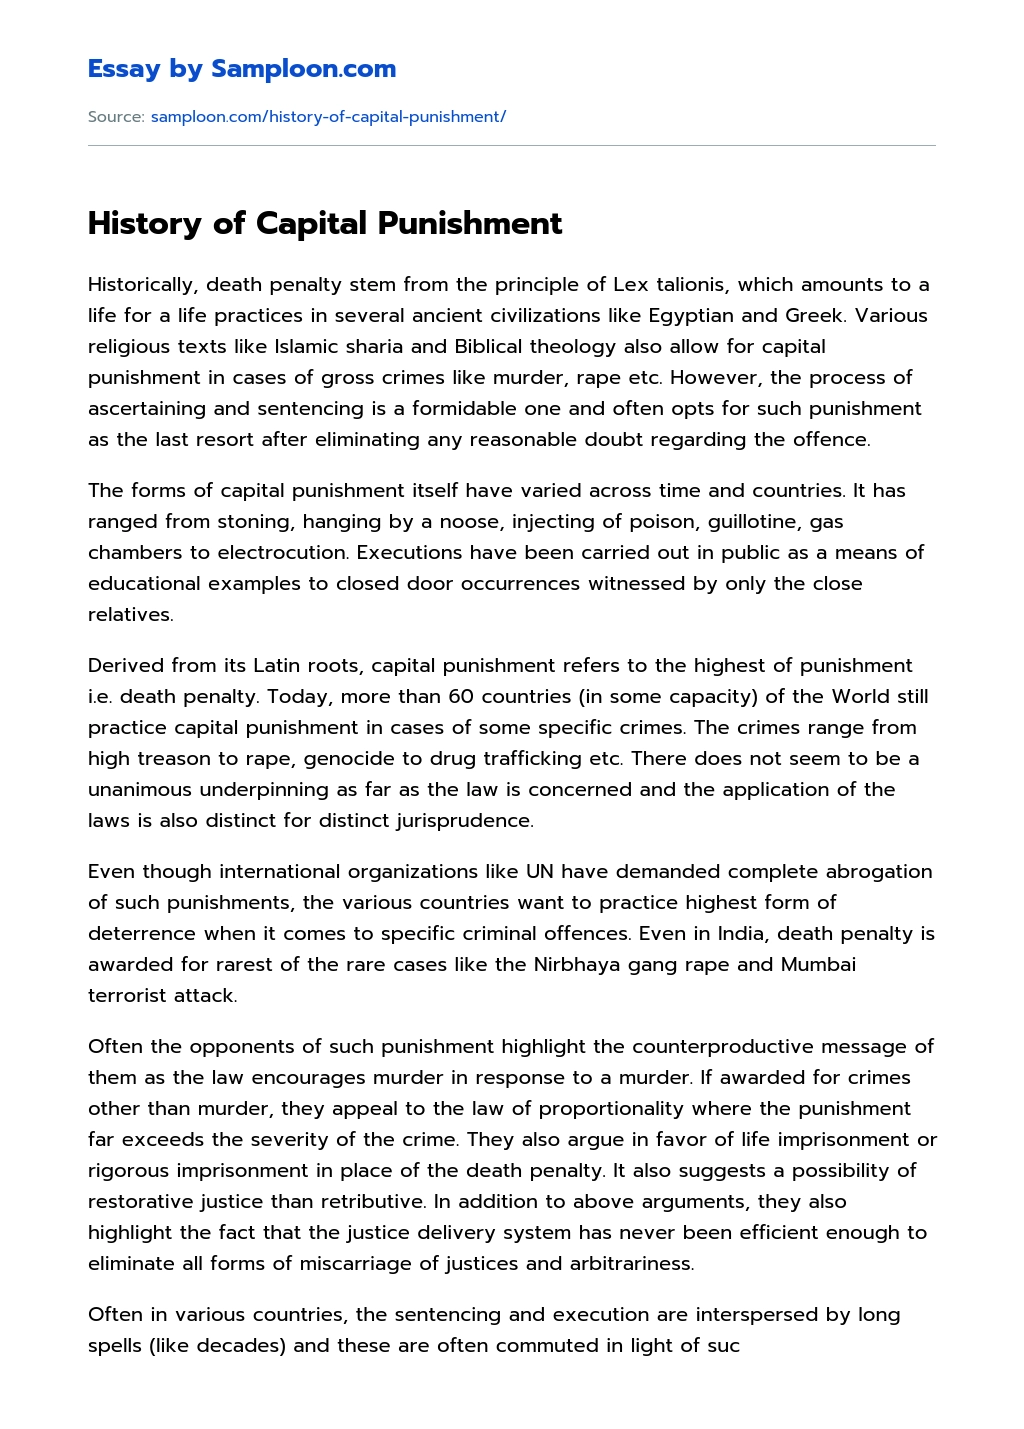 History of Capital Punishment essay